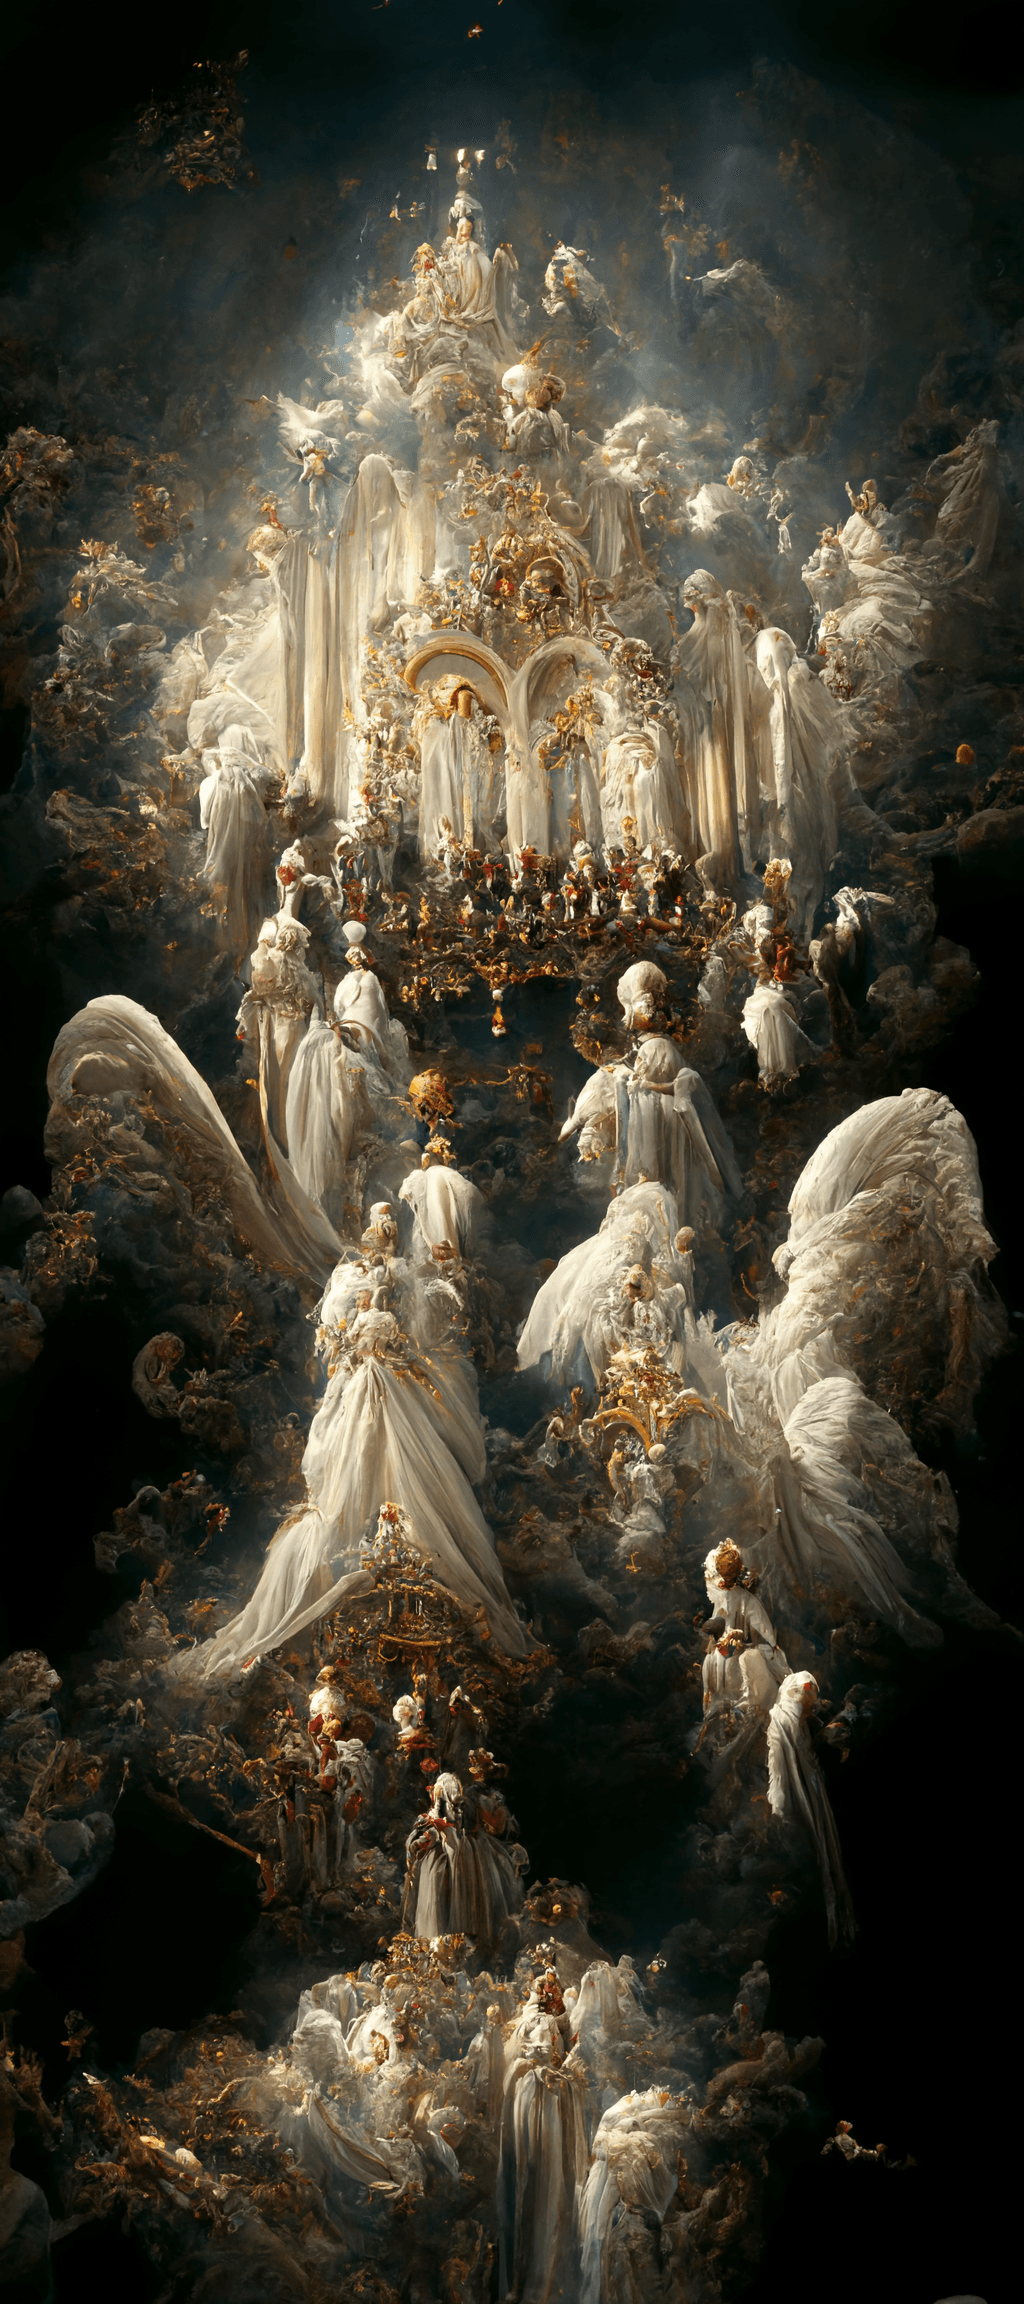 Angelic choirs